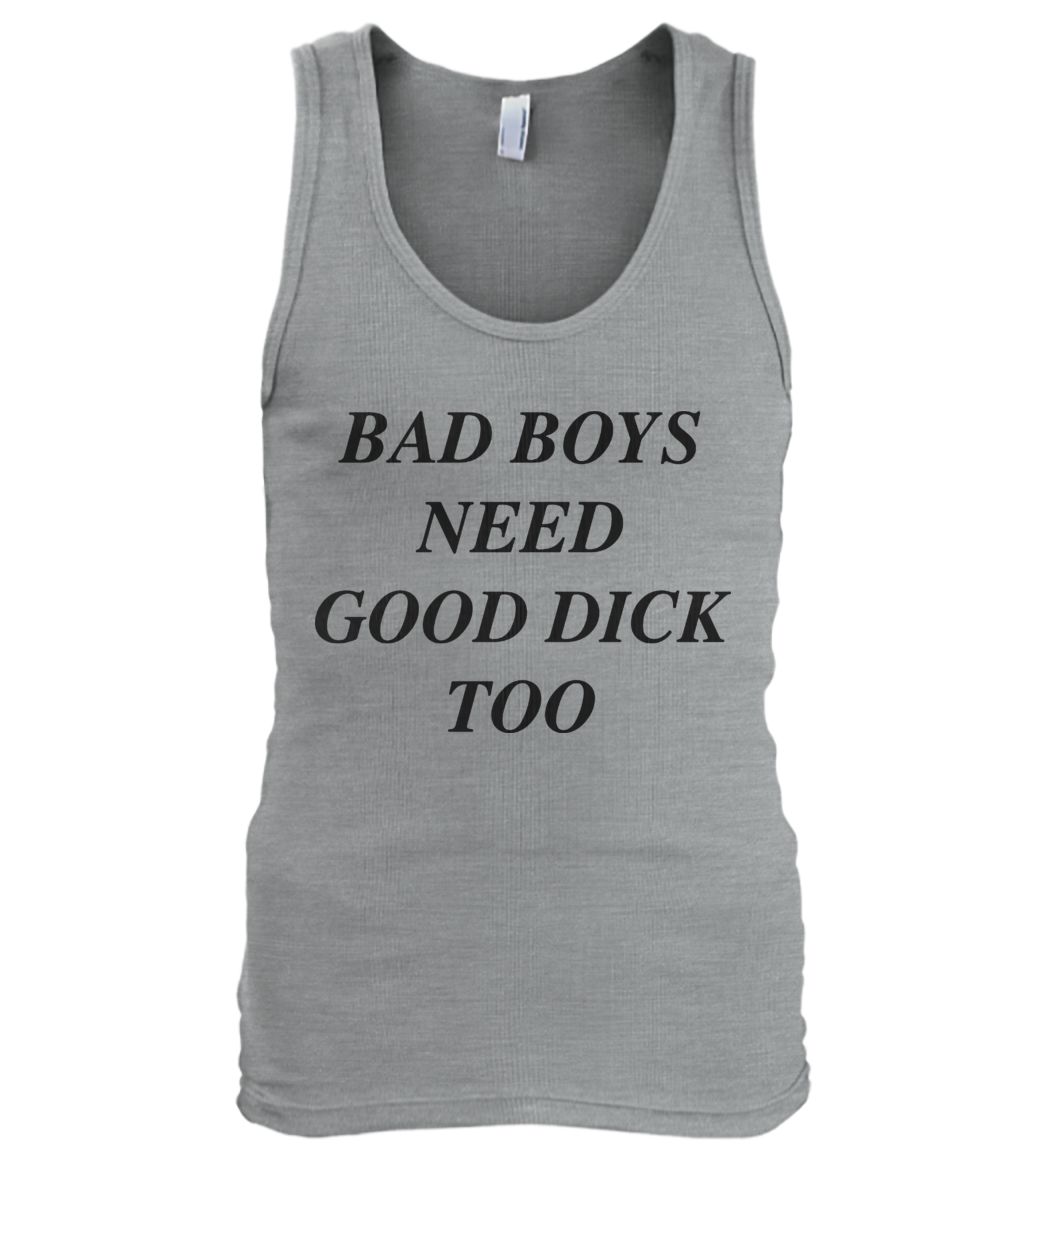 Bad boys need good dick too men's tank top